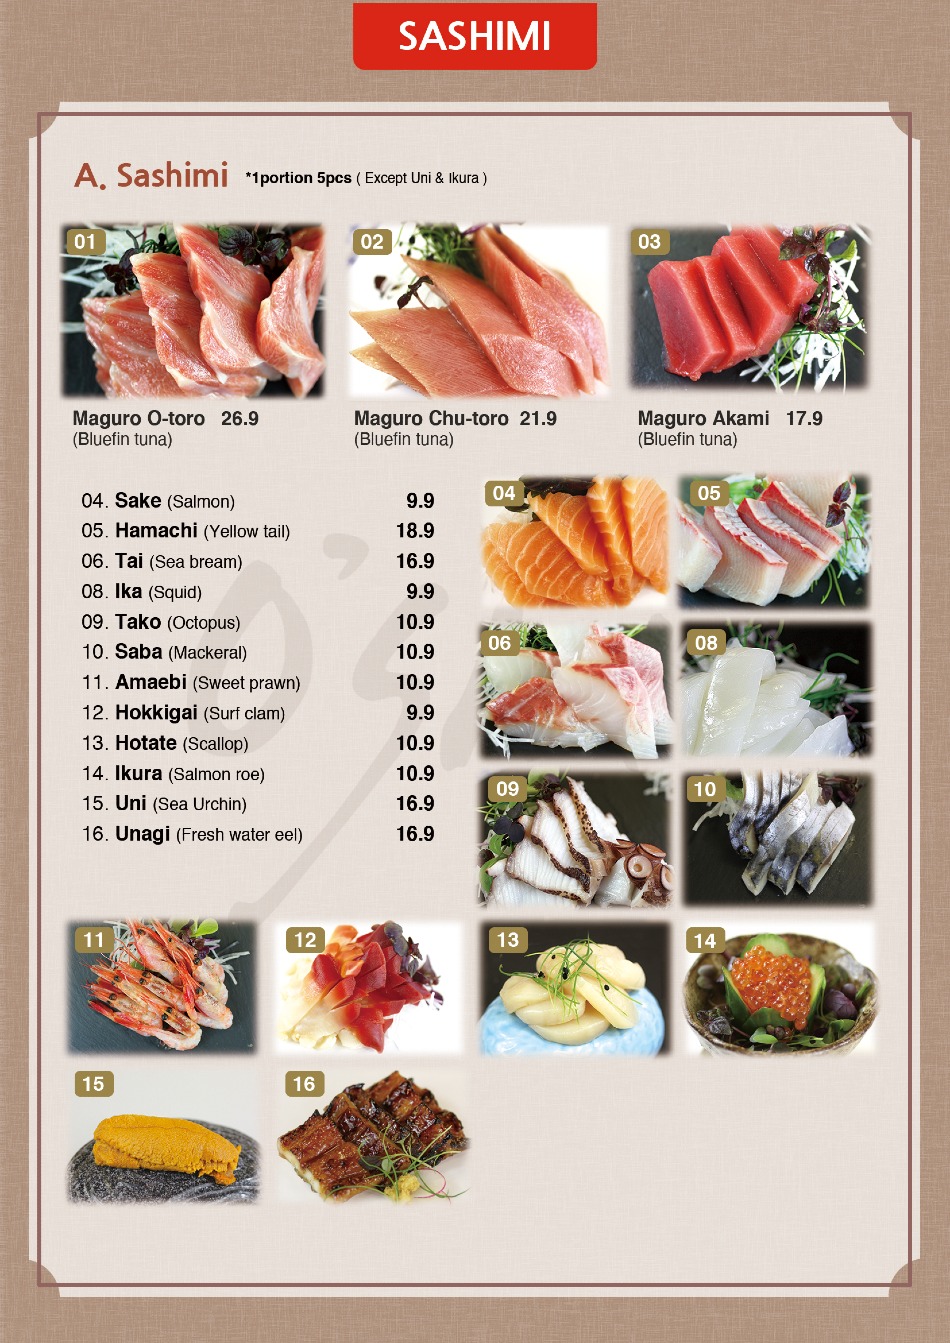 Takeaway Restaurant Menu Page - O’Shio Korean and Japanese Brighton - Brighton